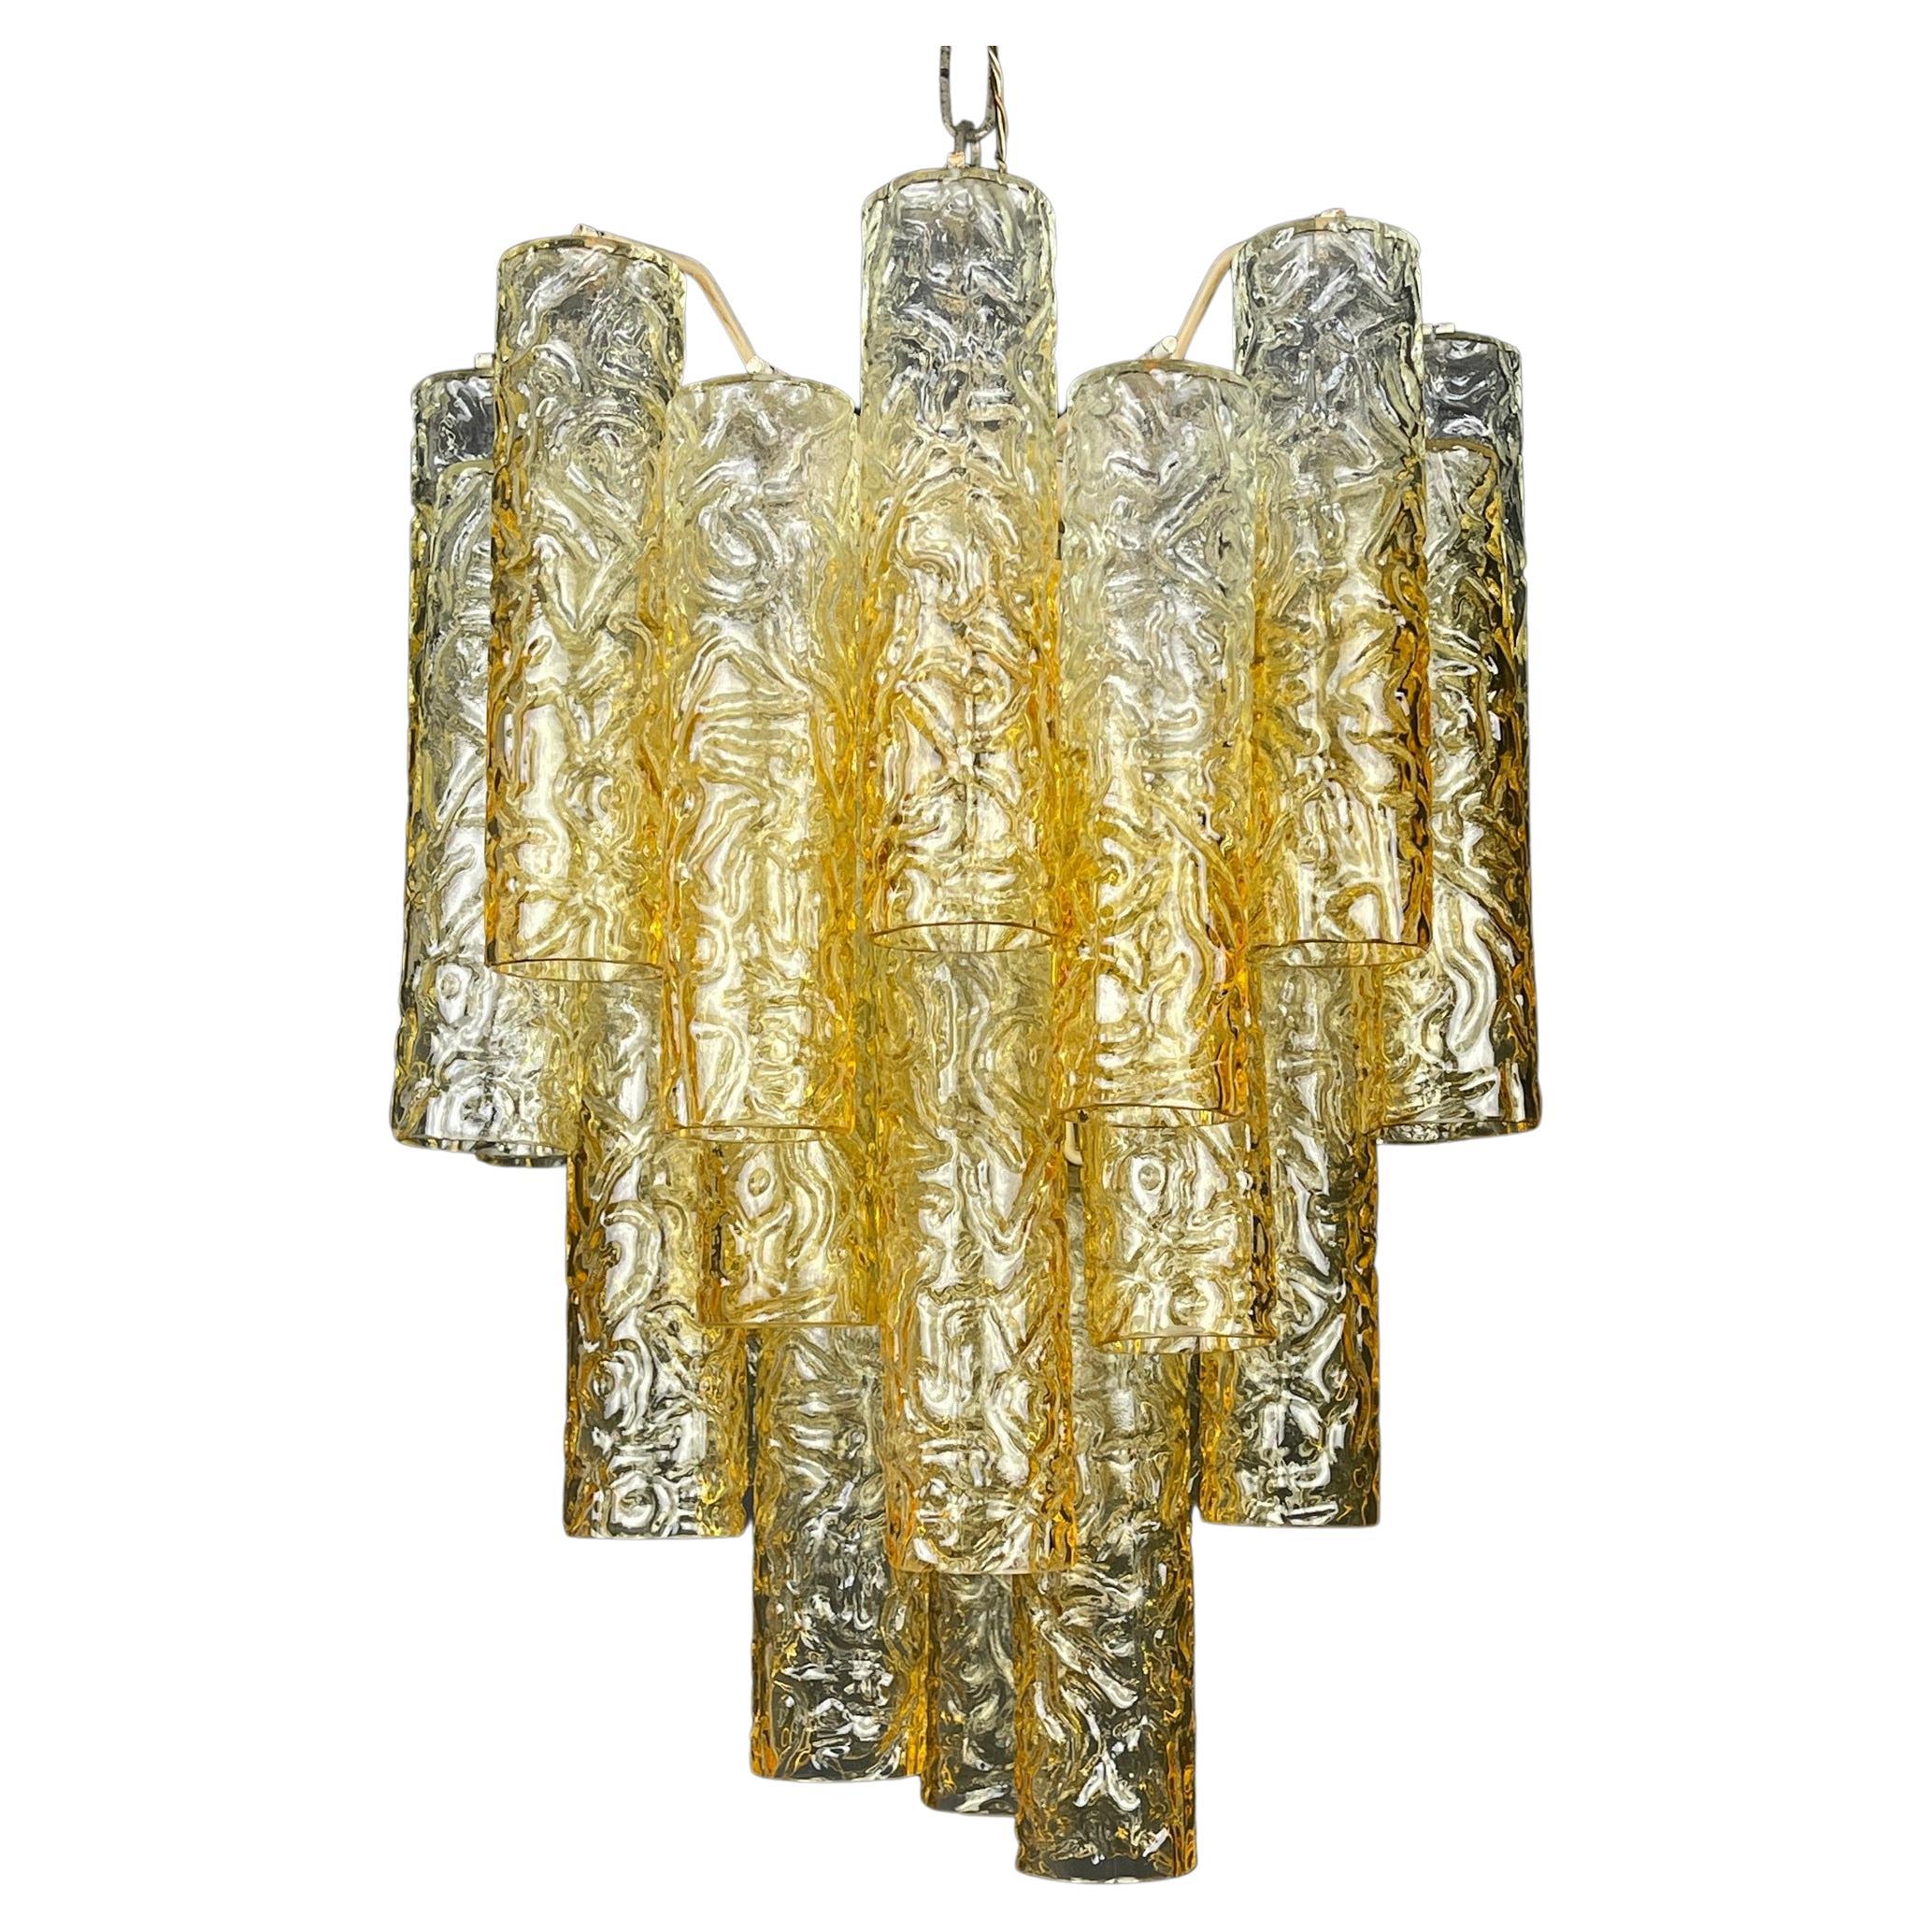 Classic murano chandelier Tronchi by Toni Zuccheri for Venini Italy 1960s